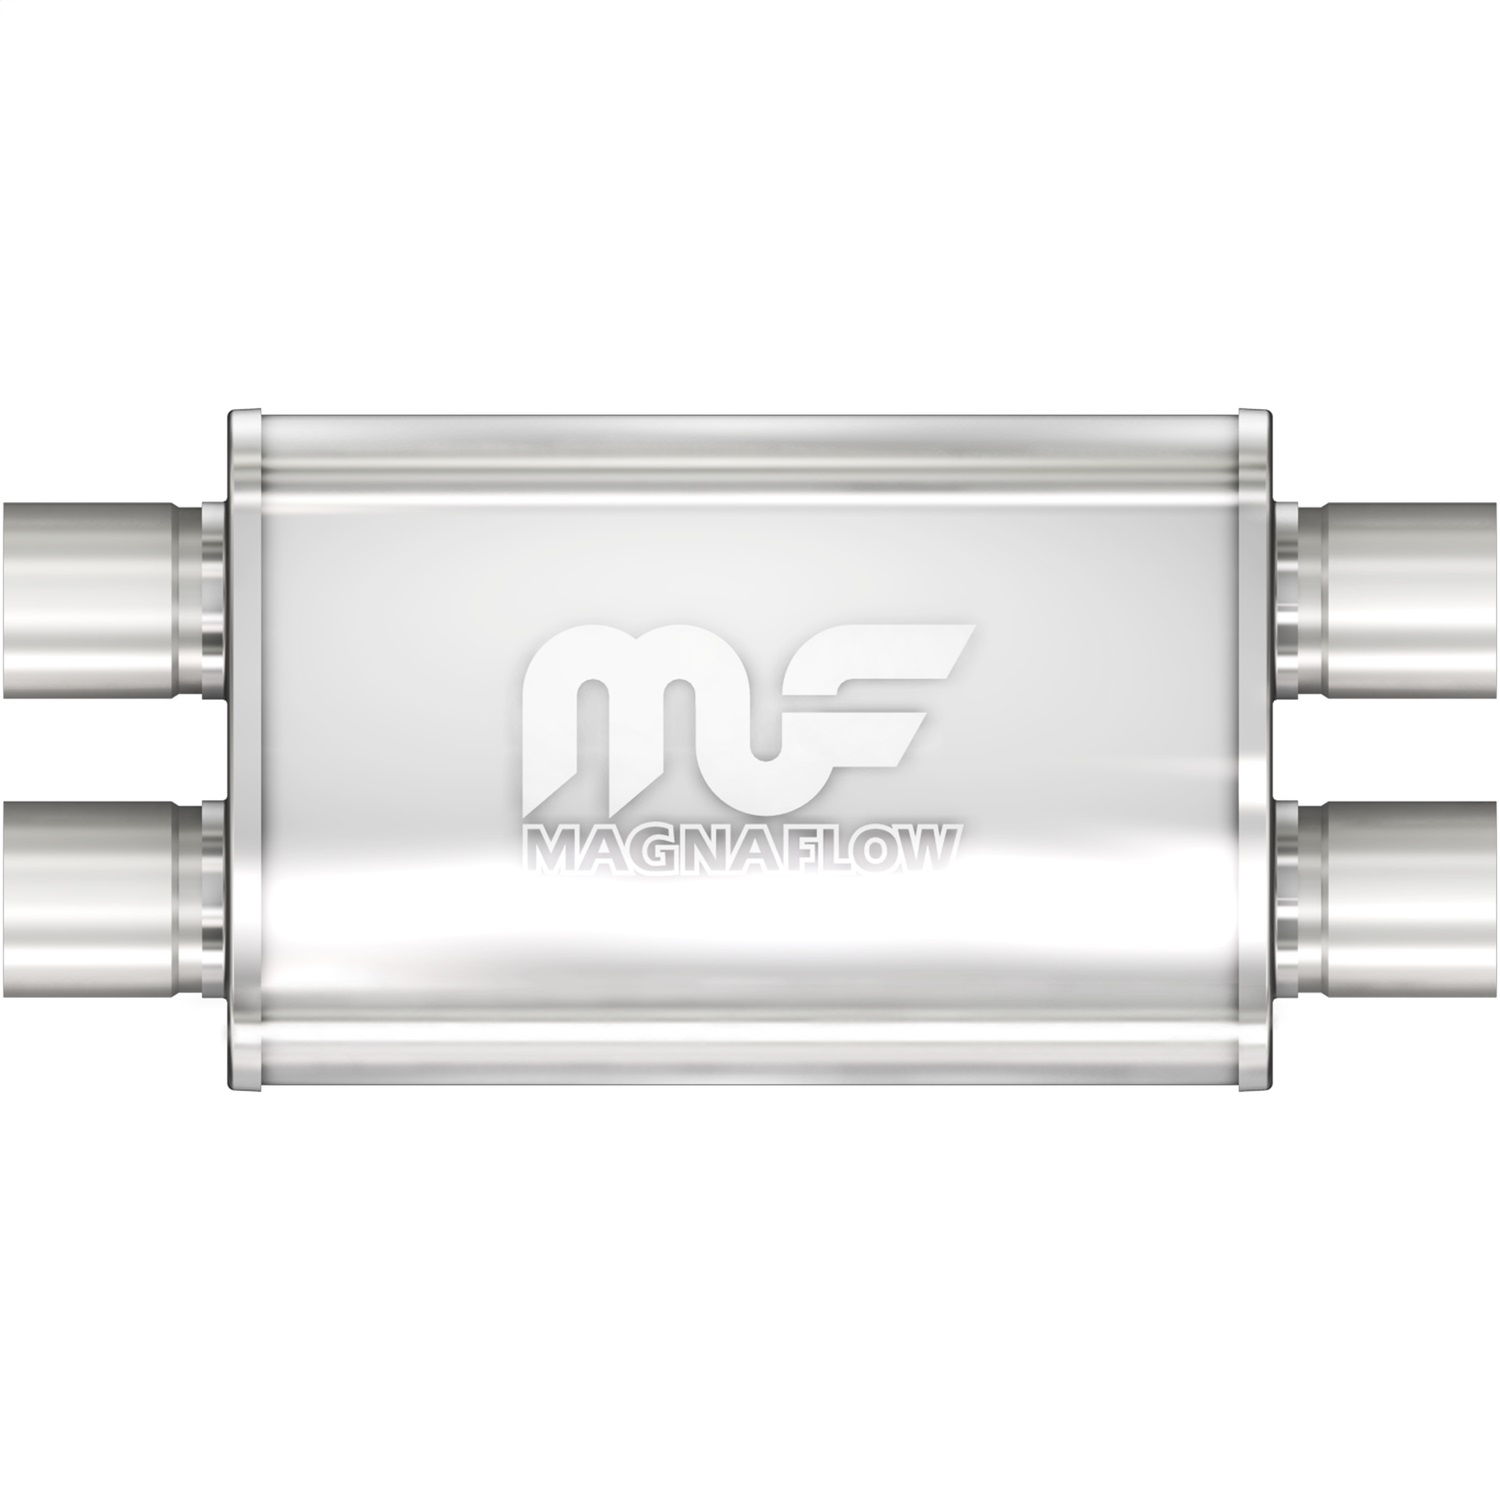 Magnaflow Performance Exhaust Magnaflow Performance Exhaust 11378 Stainless Steel Muffler